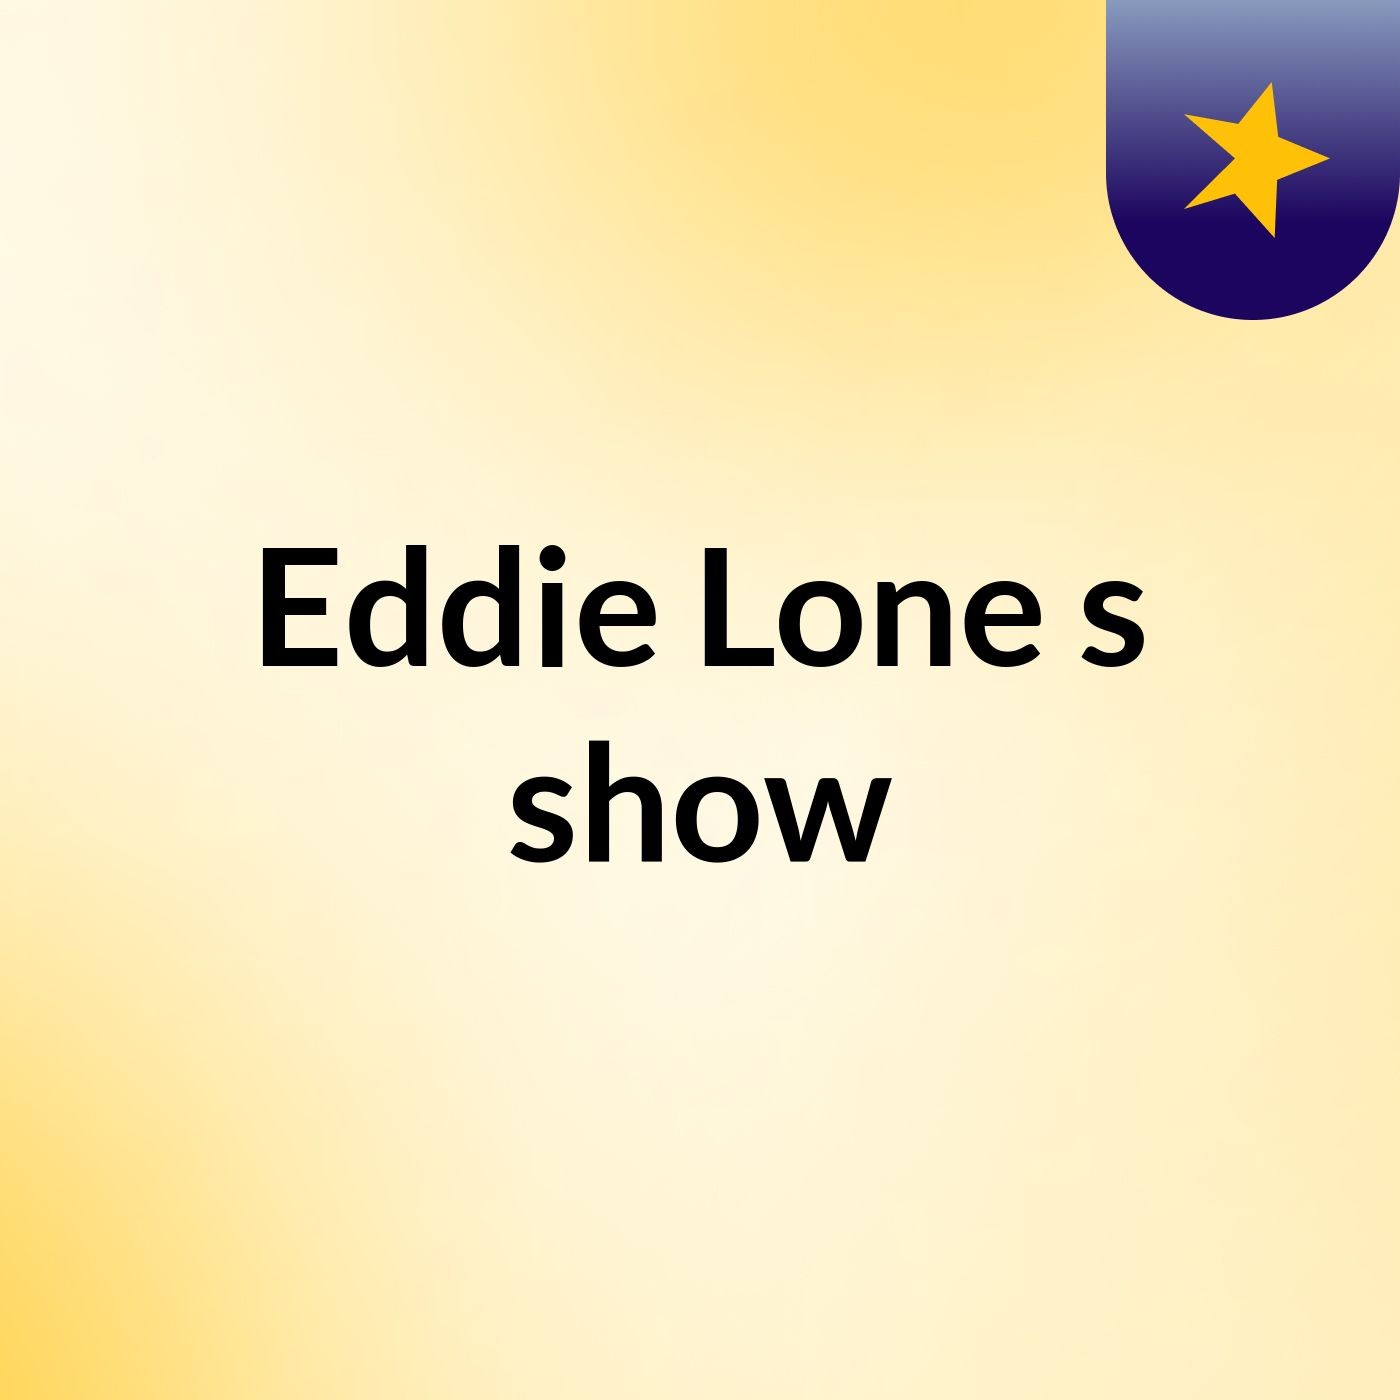 Eddie Lone's show